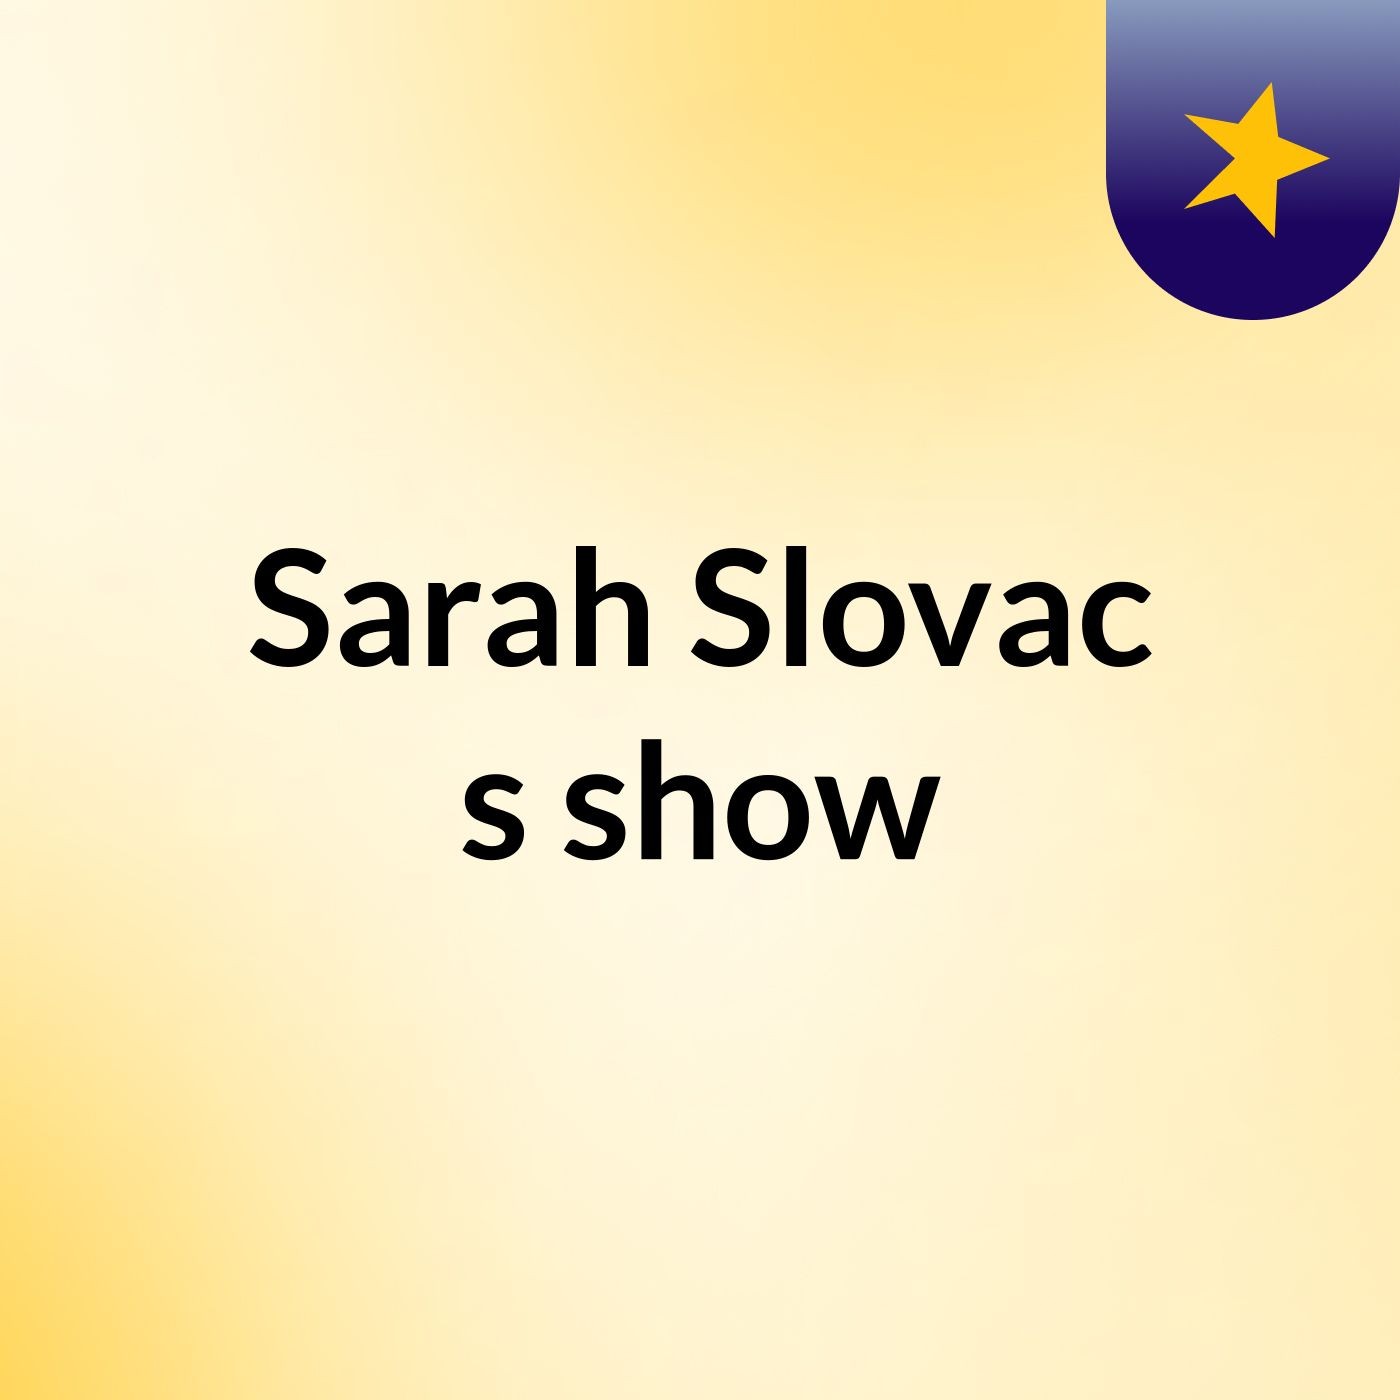 Sarah Slovac's show